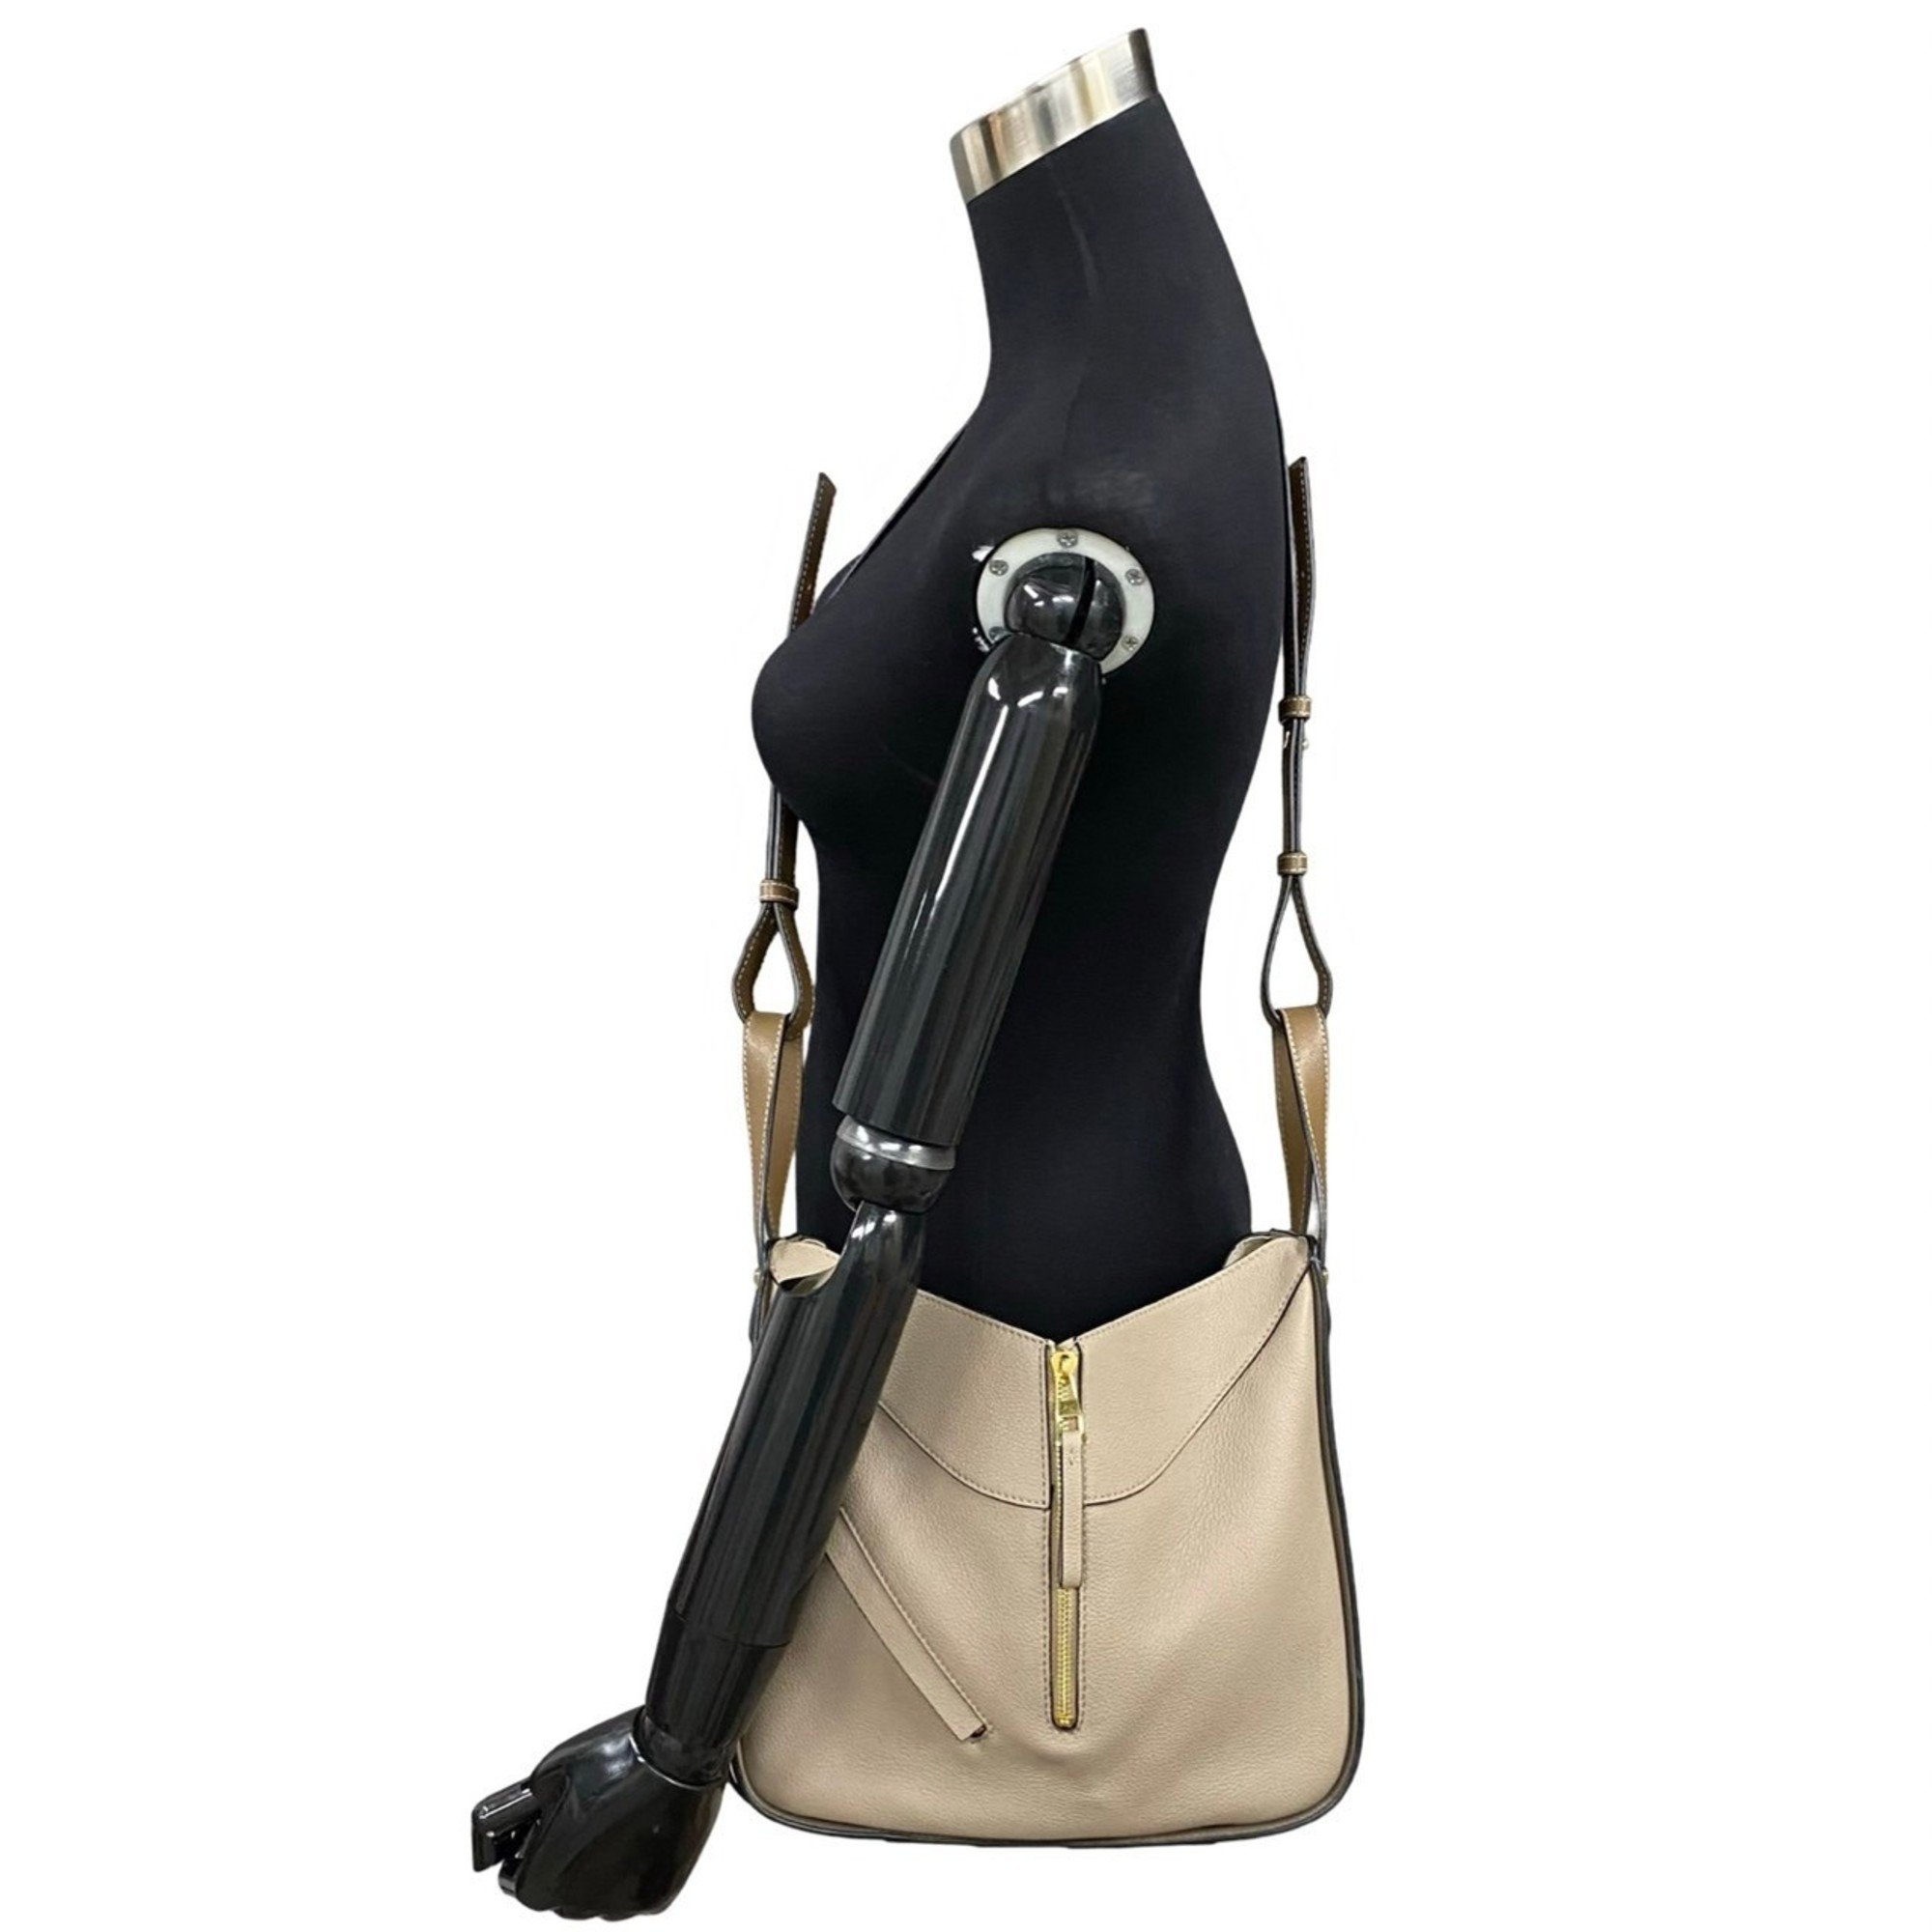 LOEWE Hammock Small Leather 2way Shoulder Bag Handbag Beige 40910